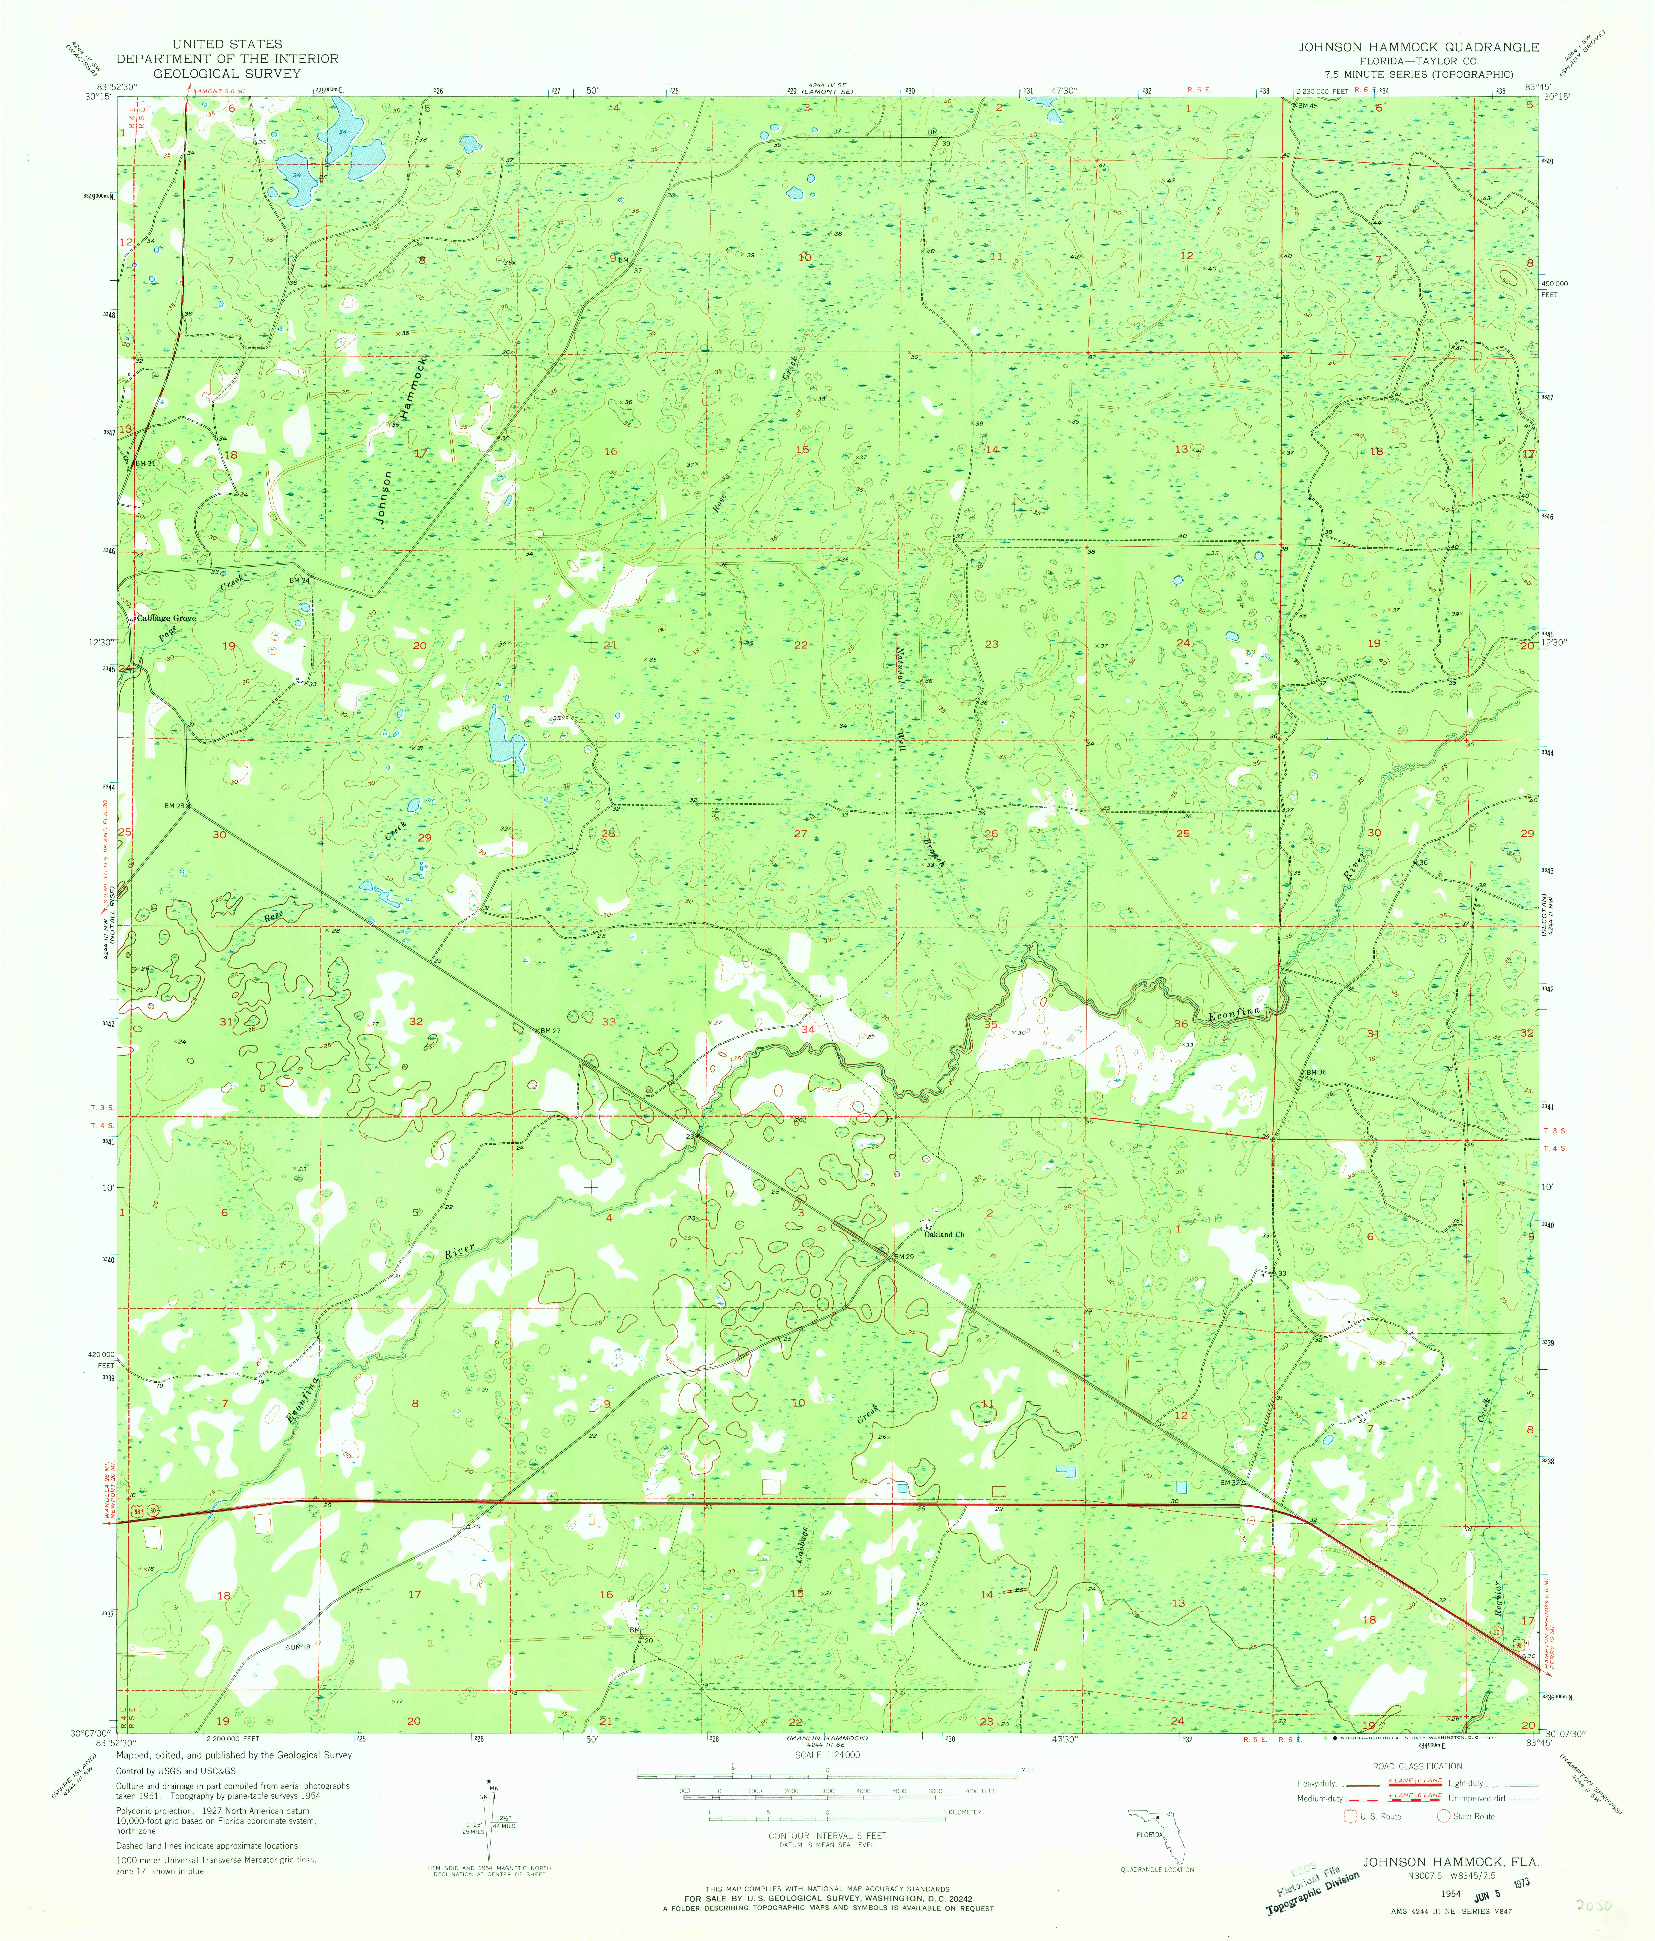 USGS 1:24000-SCALE QUADRANGLE FOR JOHNSON HAMMOCK, FL 1954